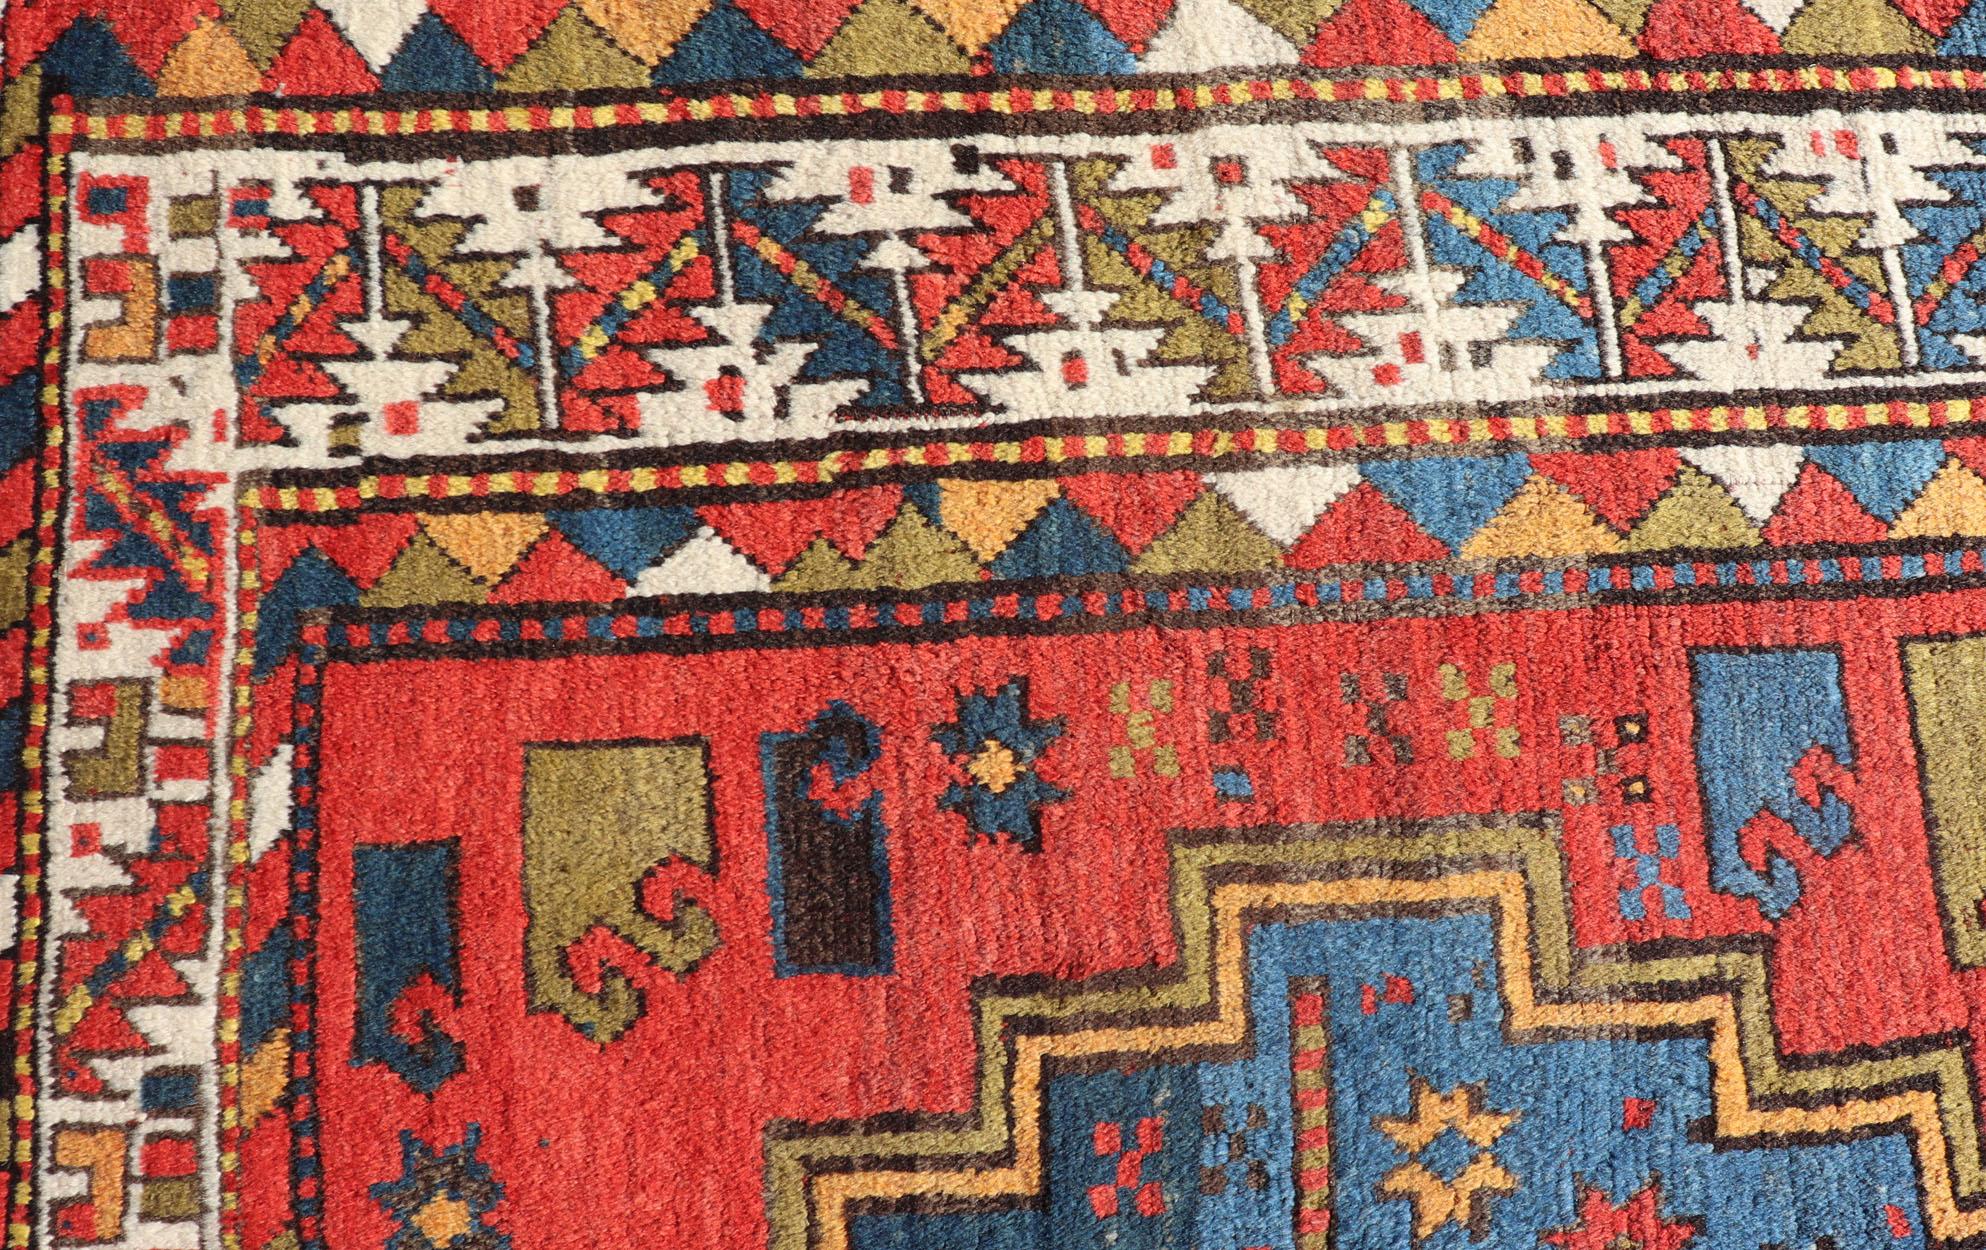 Tribal geometric medallion design Kazak rug antique from Caucasus region in multi-colors. Keivan Woven Arts / rug/EMB-9623-P13571, country of origin / type: Iran / Caucasian Kazak, circa 1900.
Measures: 4'6 x 7.